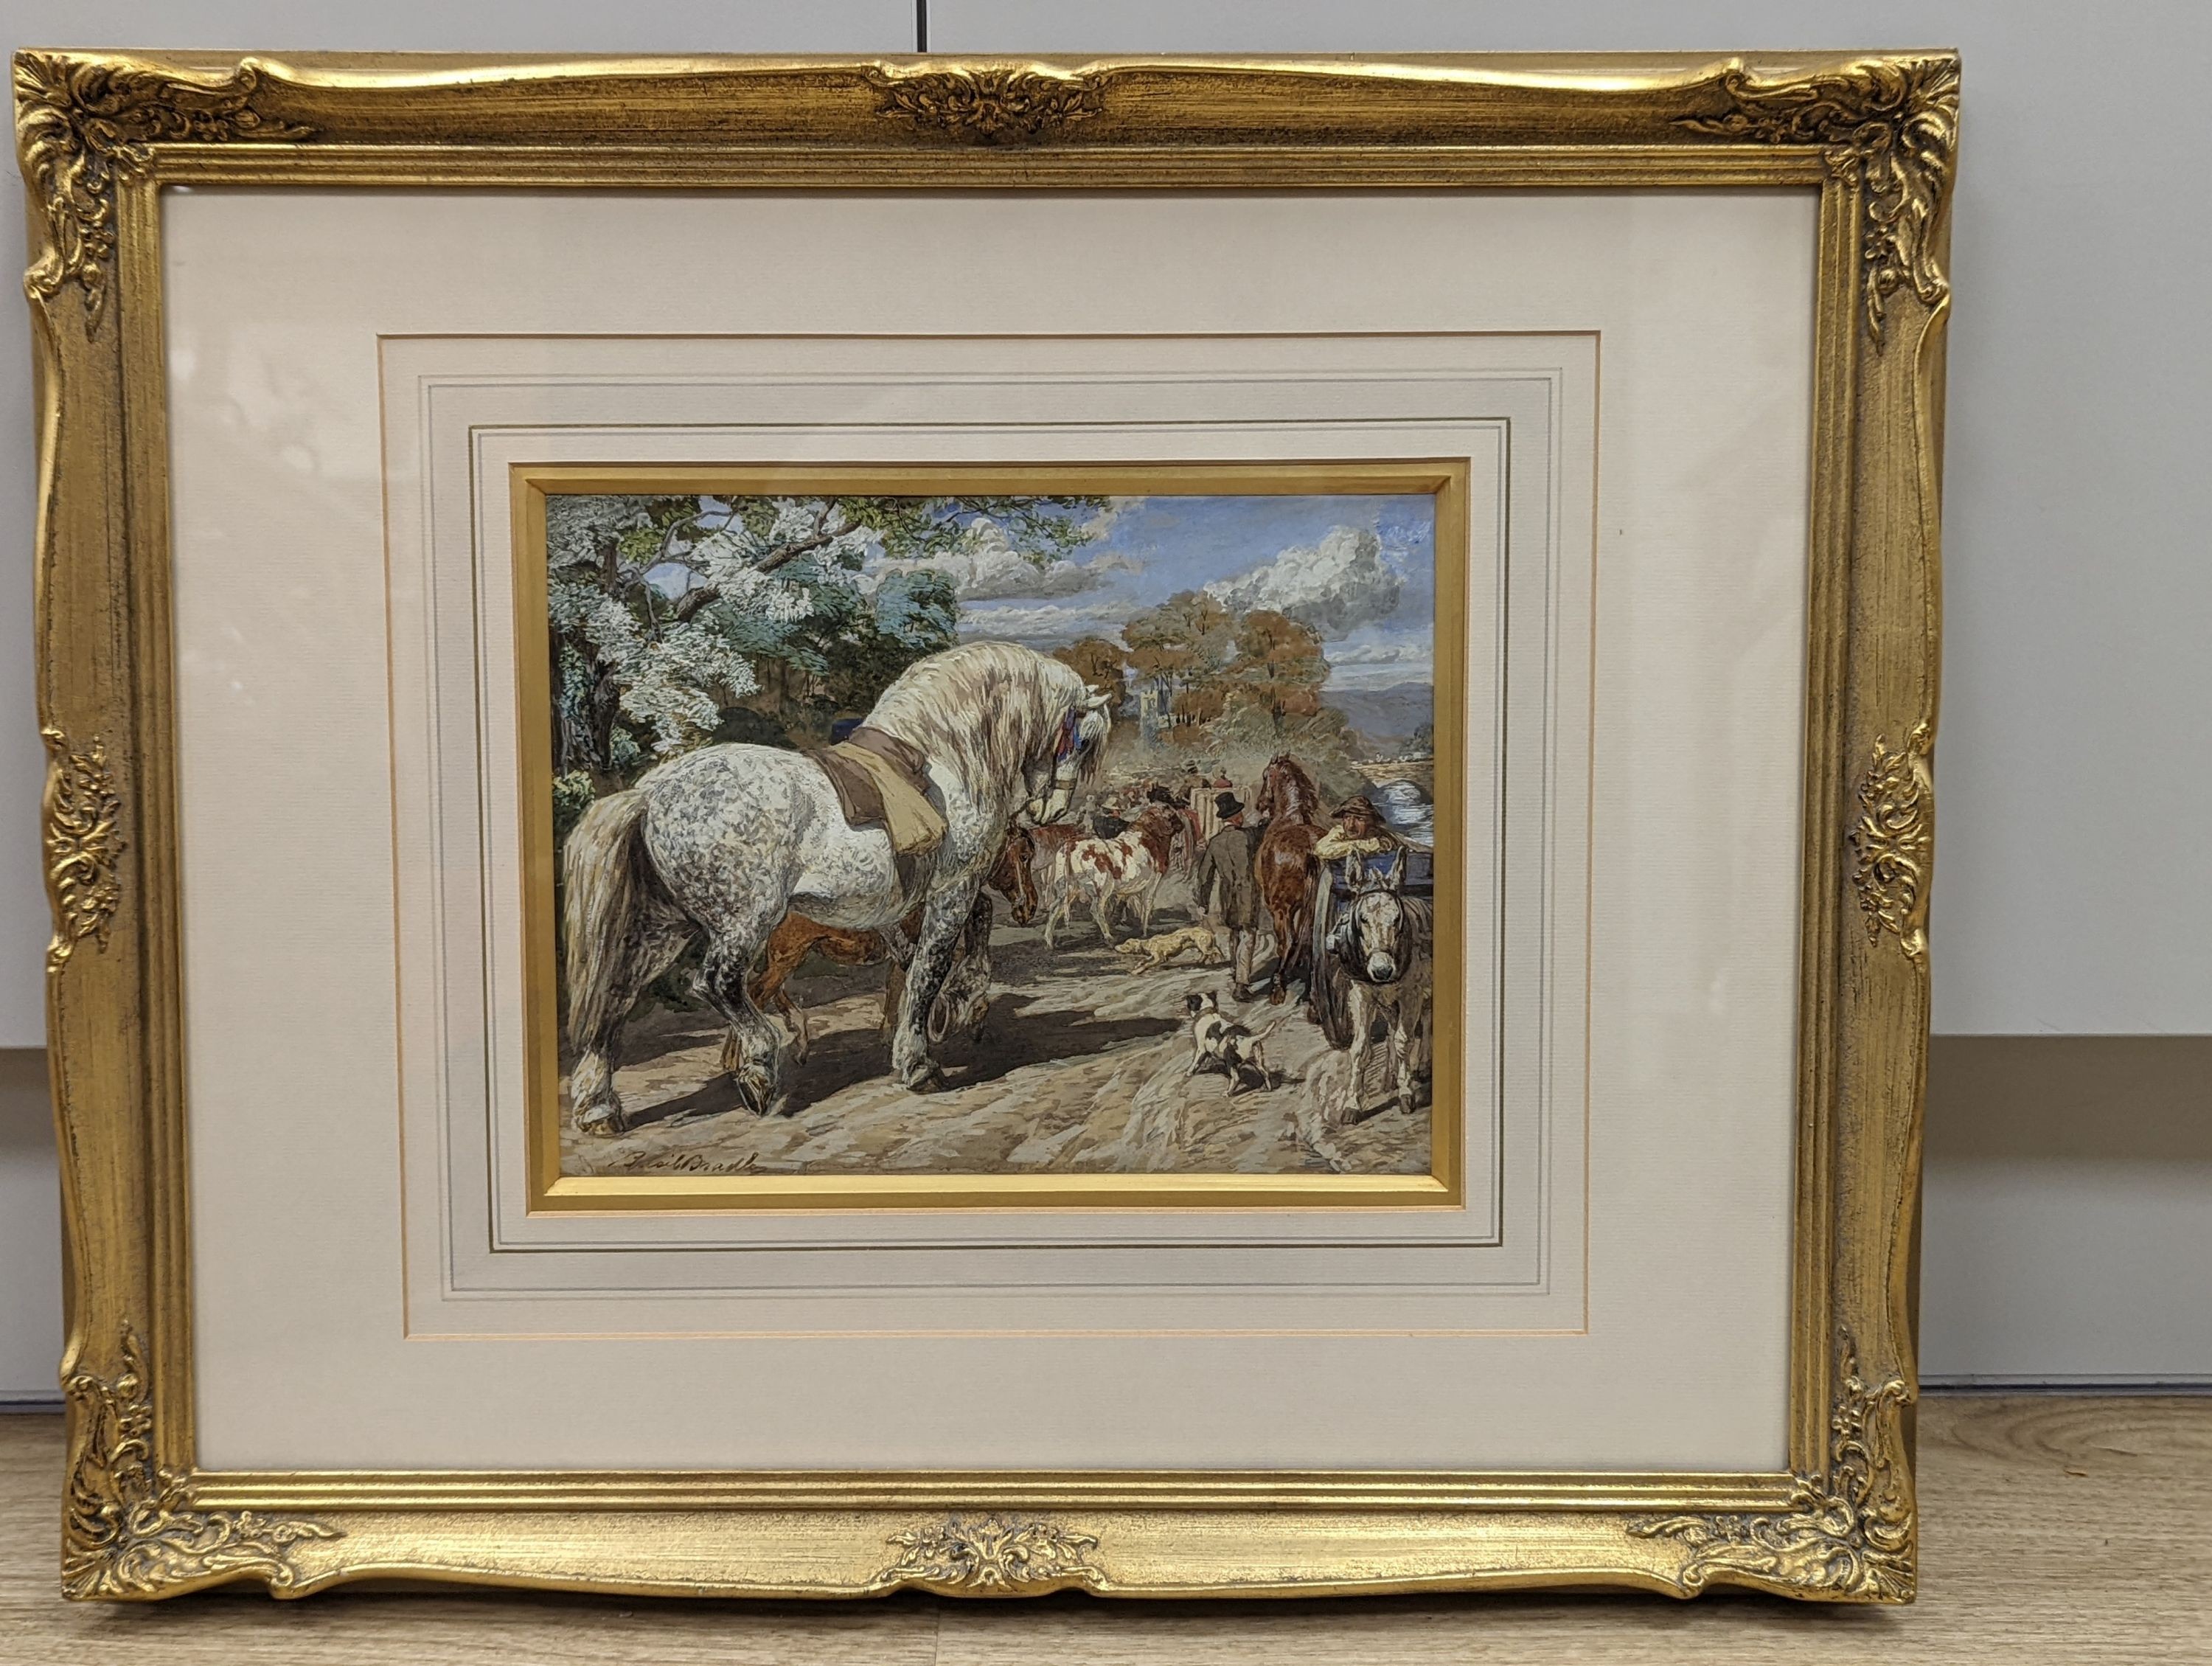 Basil Bradley (1842-1904), watercolour, Heading to market, signed, 21 x 27cm